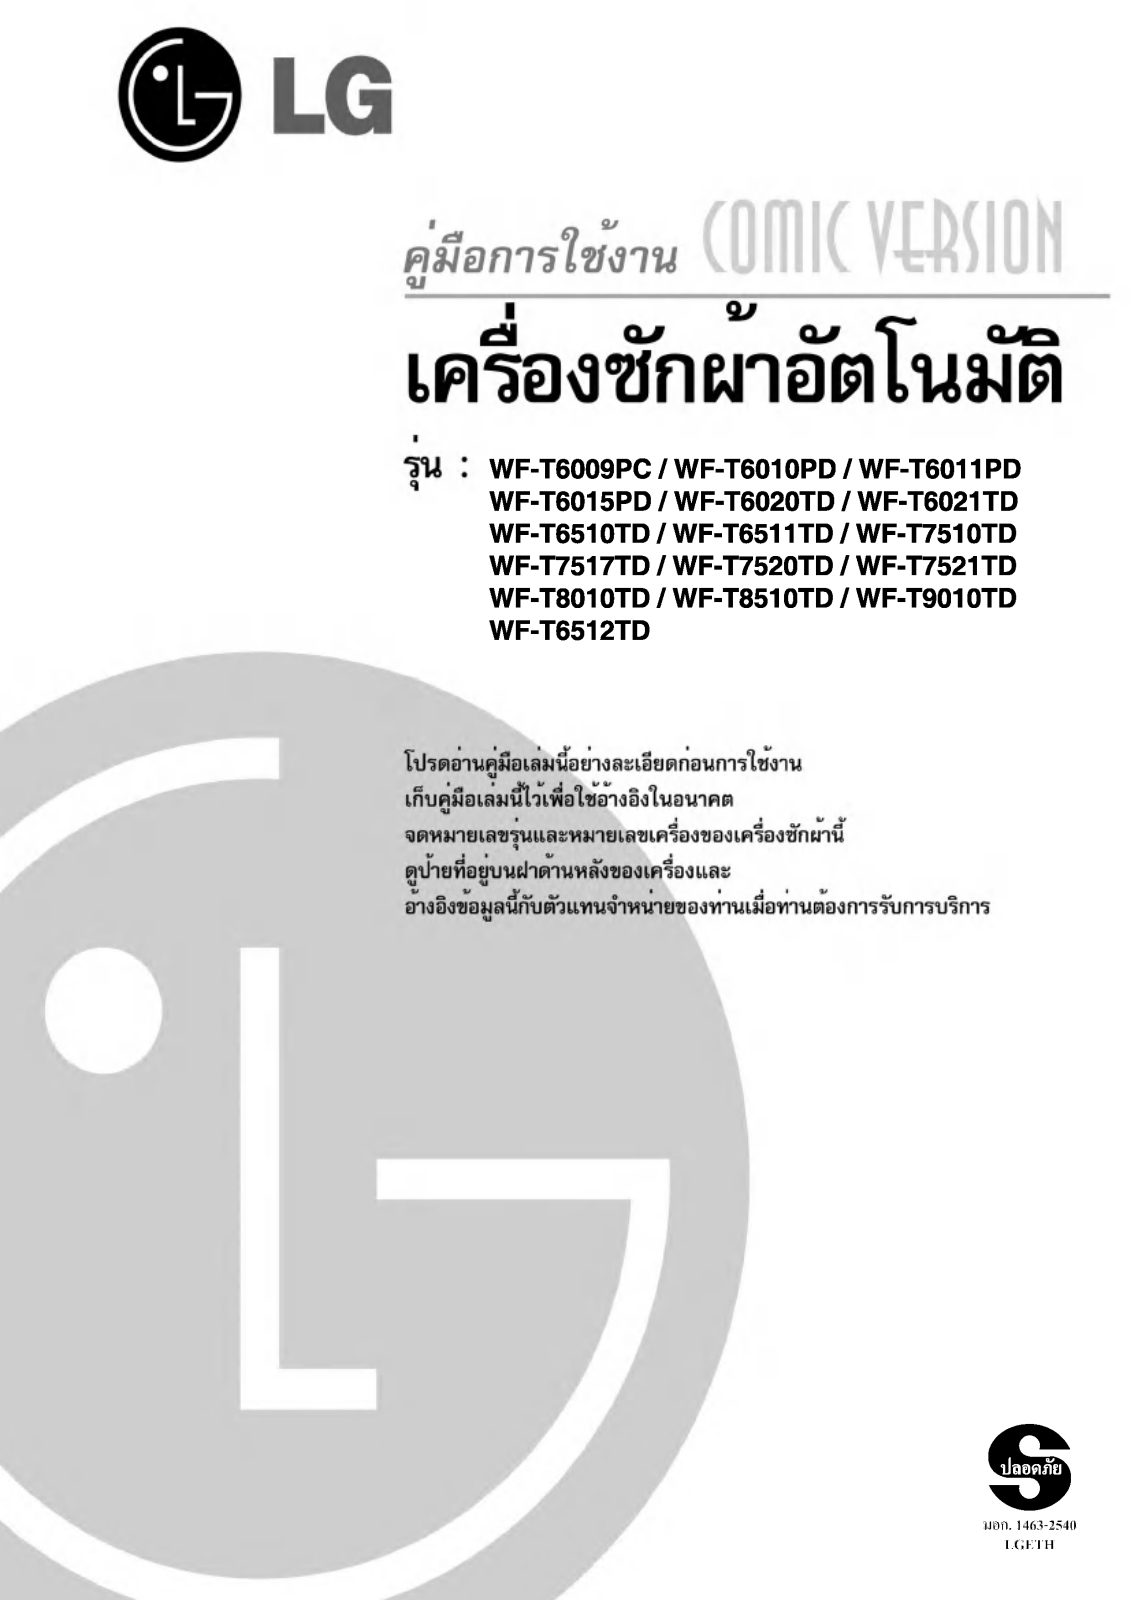 LG WF-T8500TDT Instruction manual